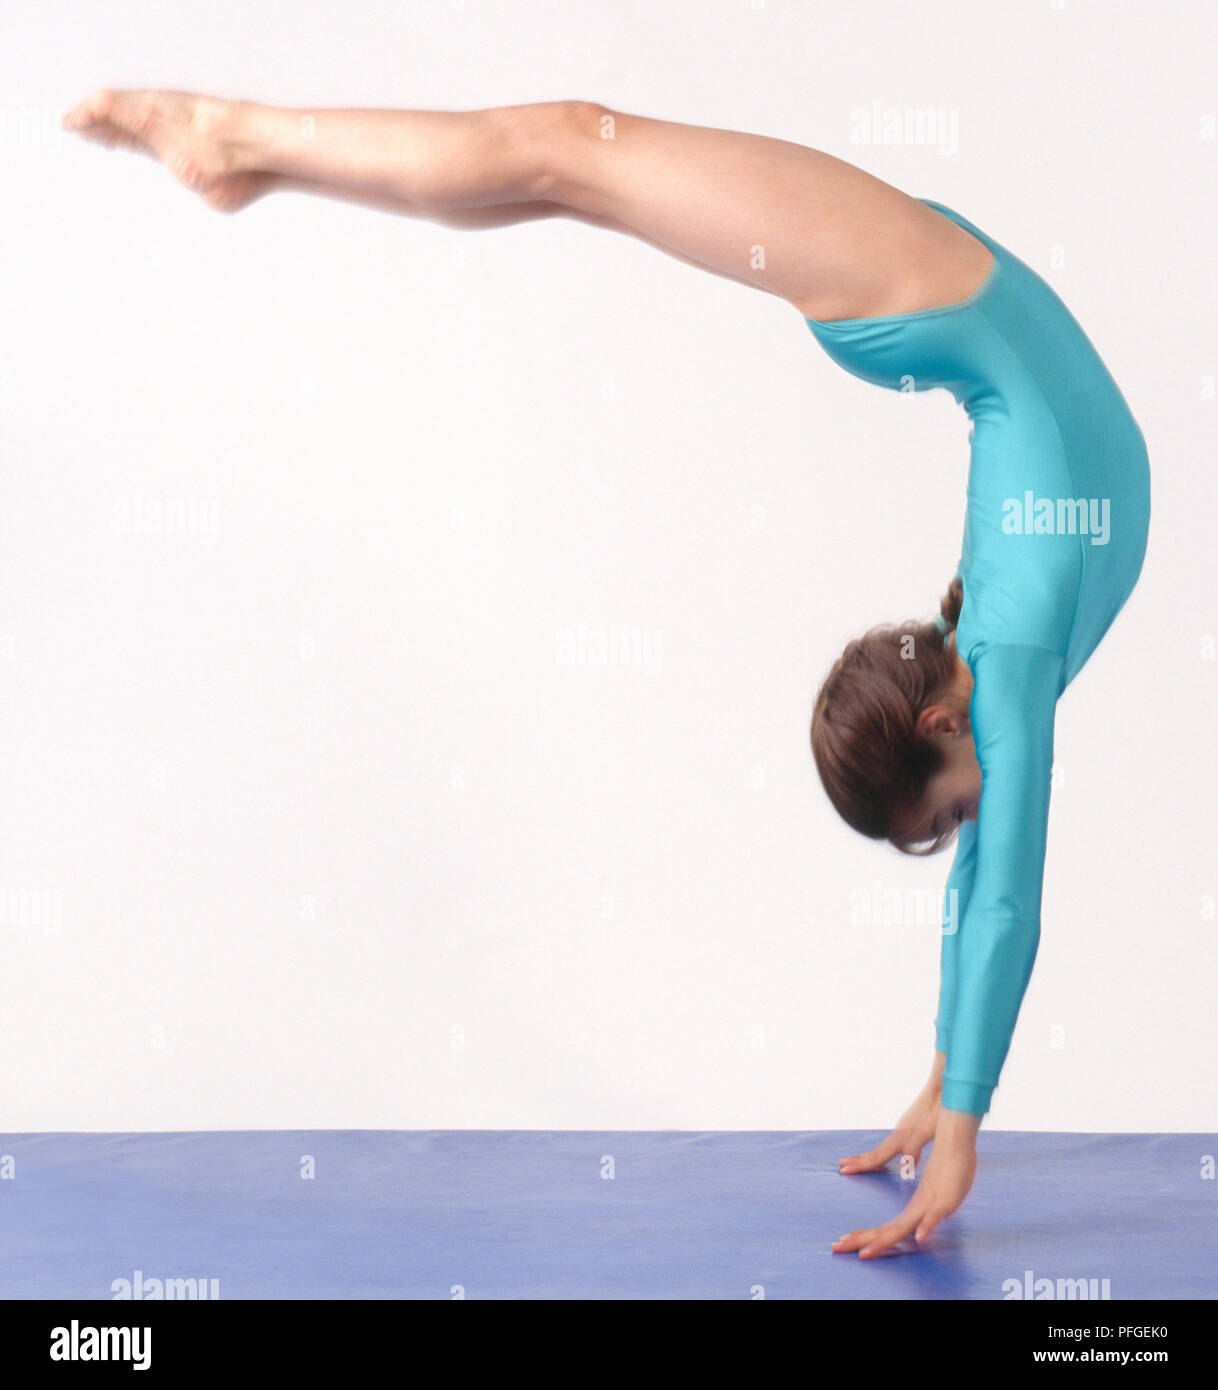 Gymnast performing backflip, side view Stock Photo - Alamy